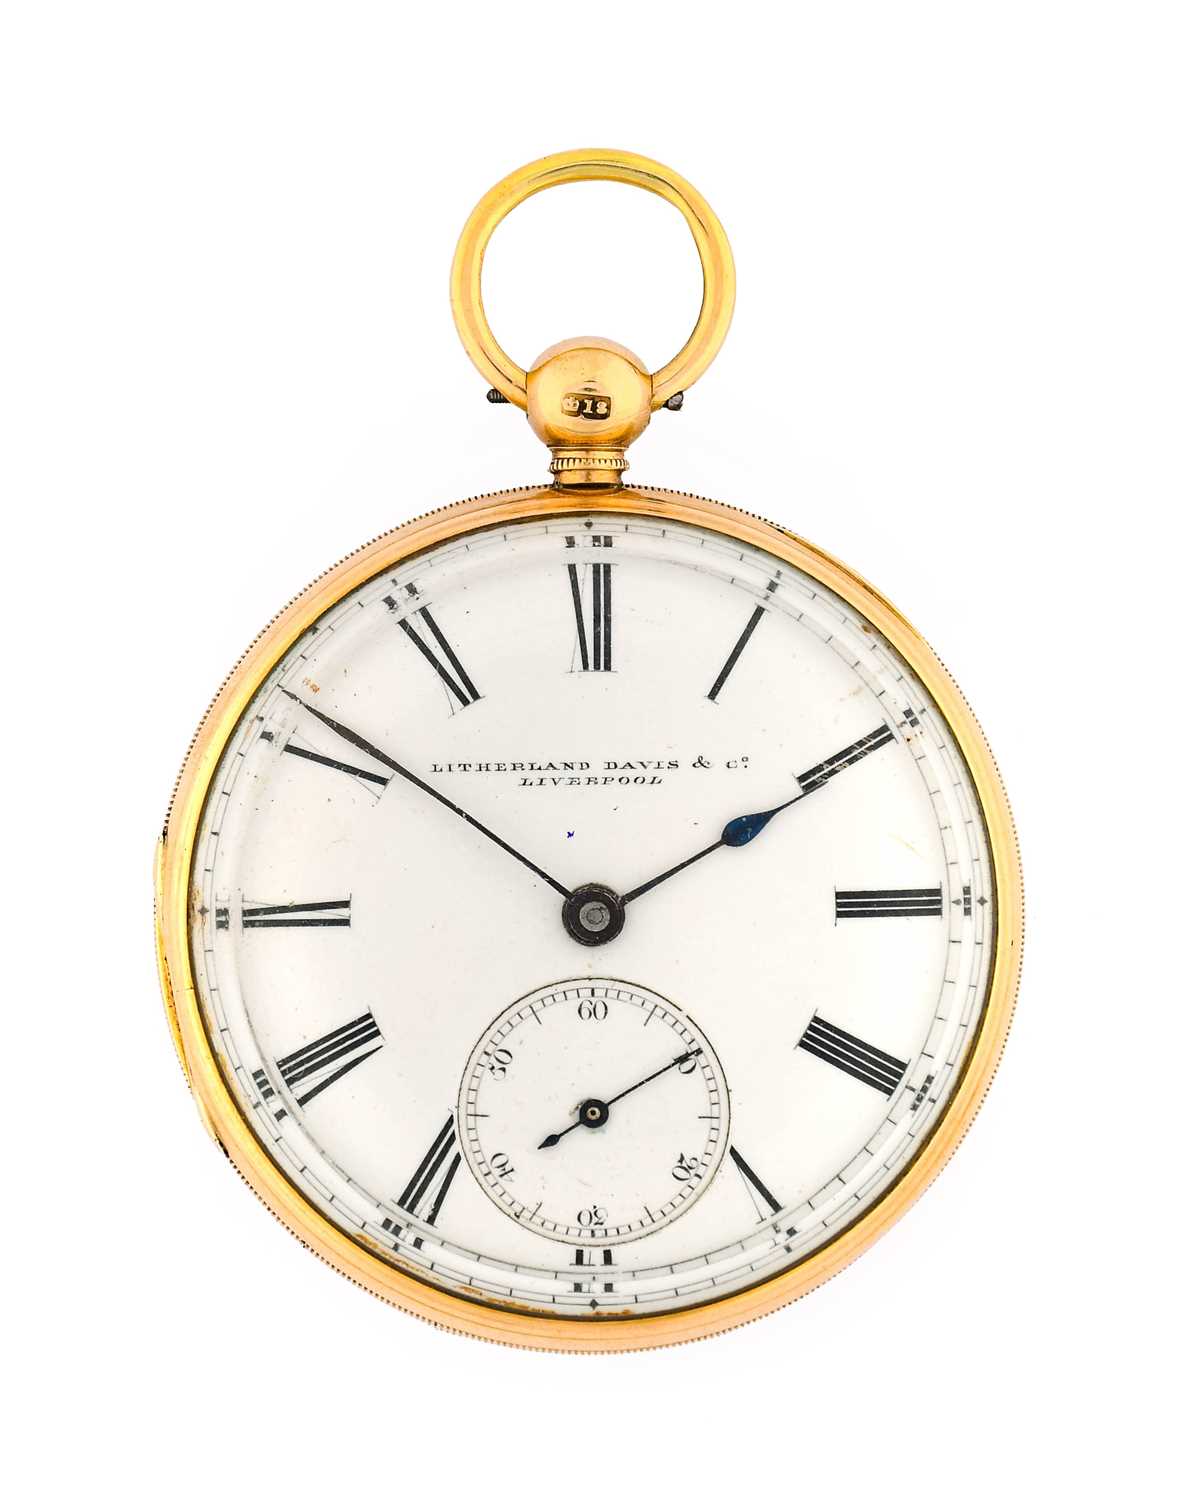 Litherland Davis & Co: An 18 Carat Gold Open Faced Pocket Watch, signed Litherland Davis & Co,